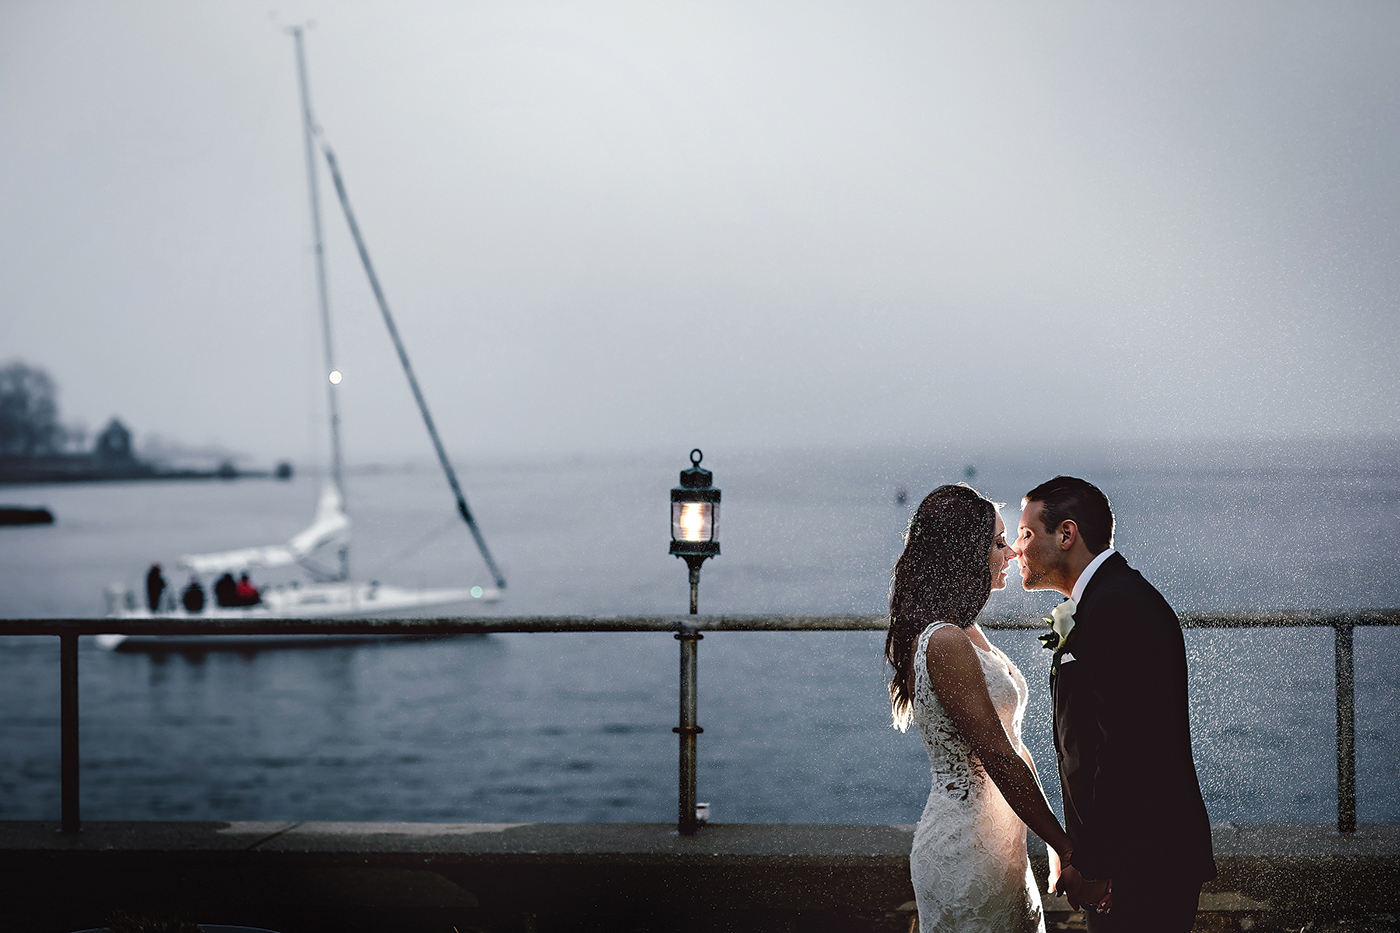 Nicole & Gregory’s Wedding at Glen Island Harbour Club (Ein Photography + Design)